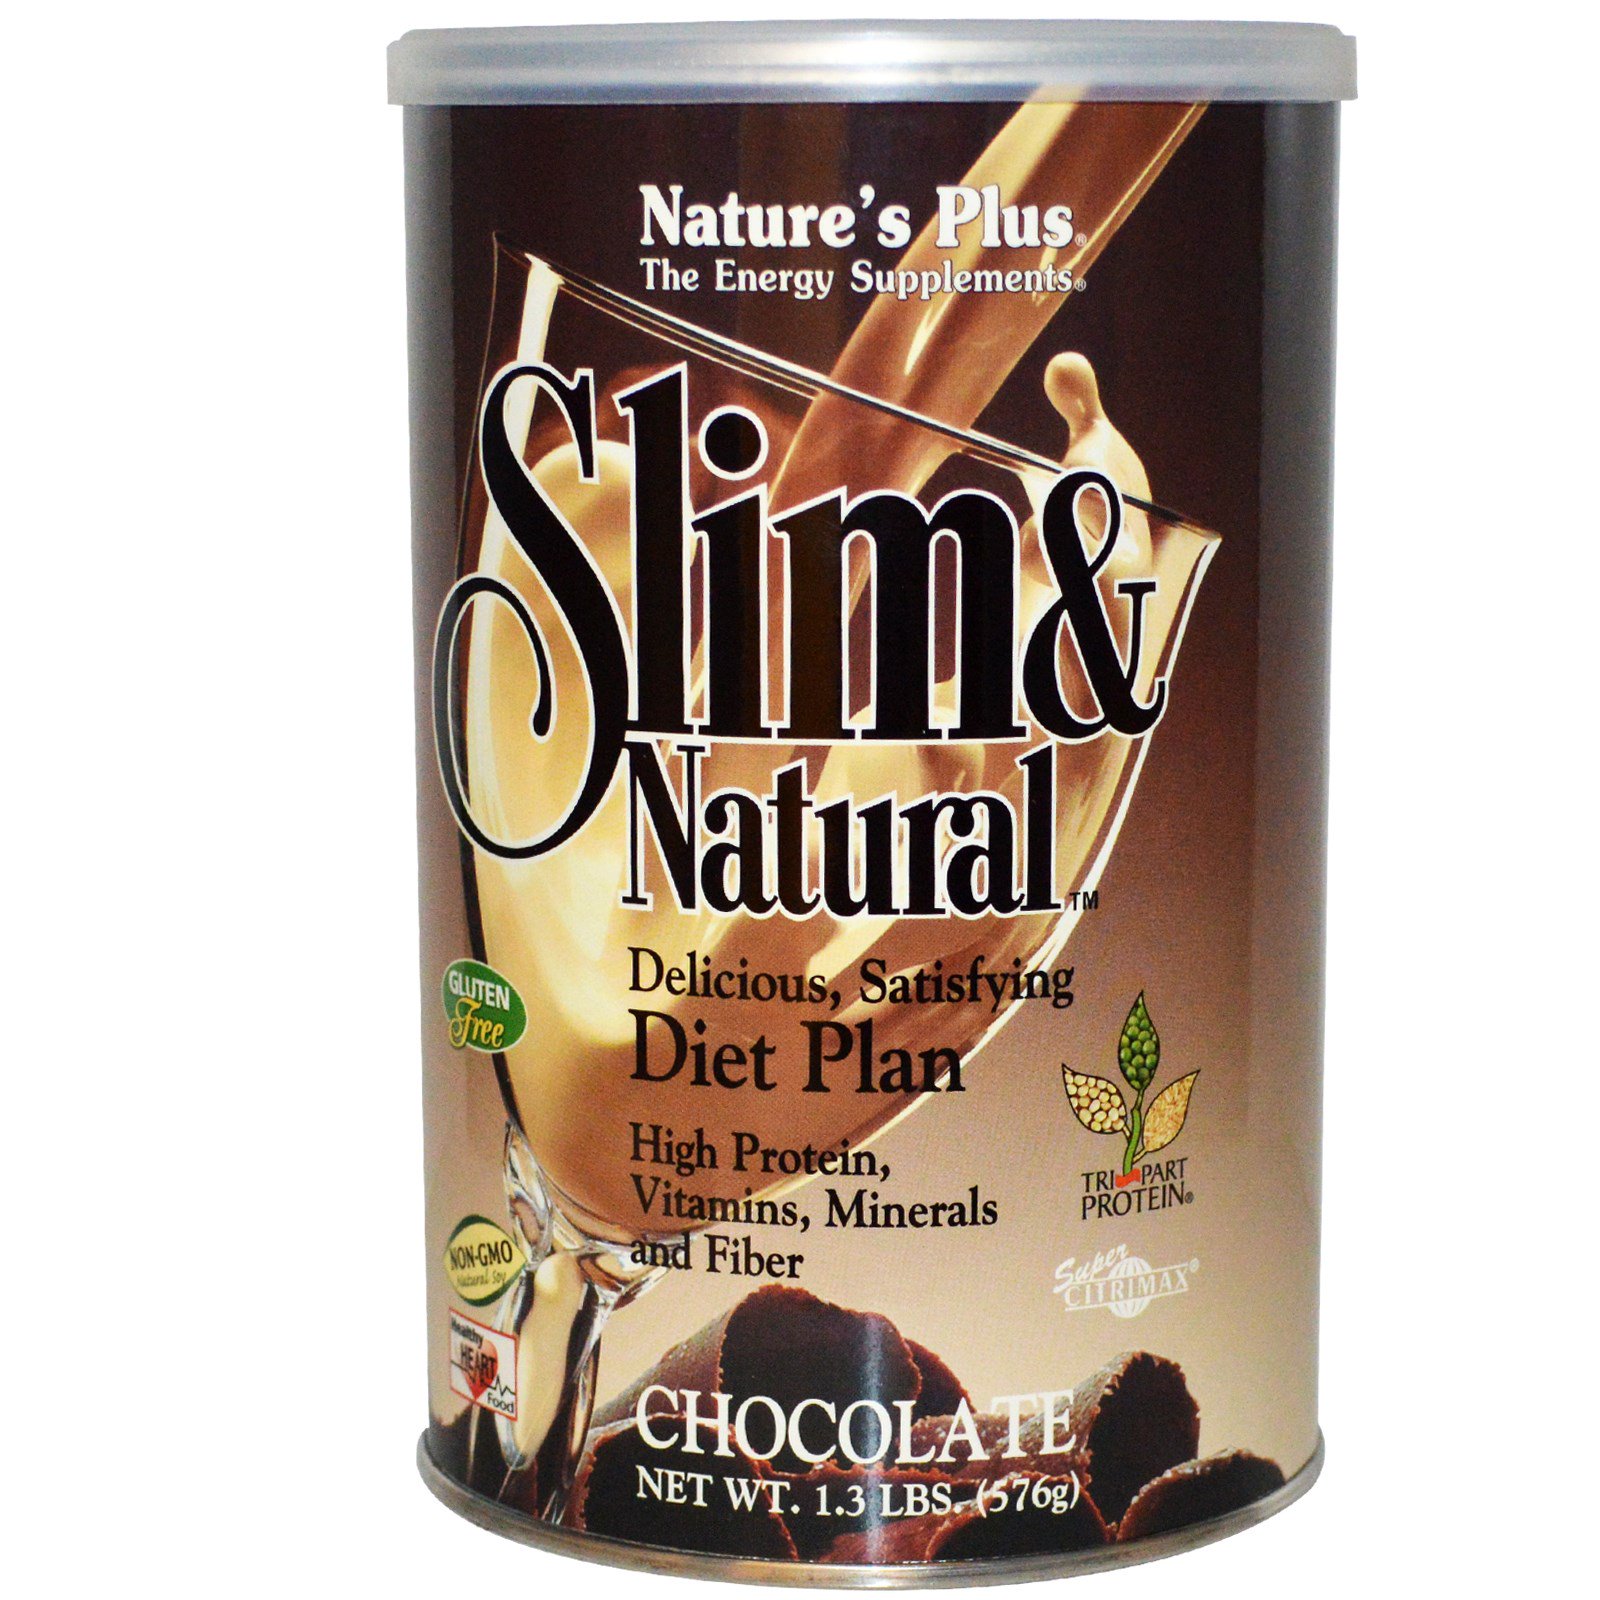 Natural Diet шоколад. Pound Plus Chocolate. Natural slims